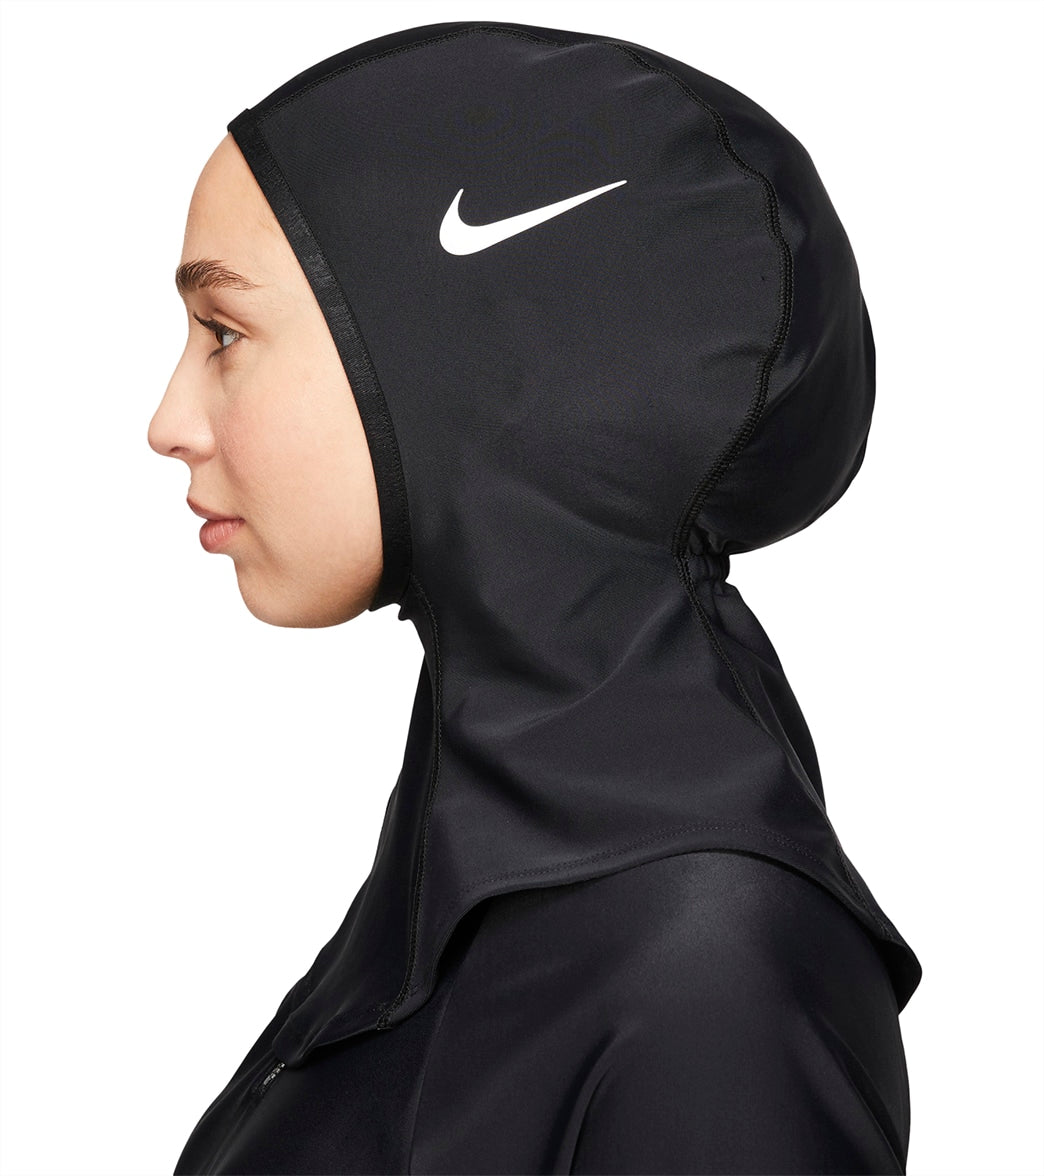 Nike Modest Chlorine Resistant Hijab at SwimOutlet.com